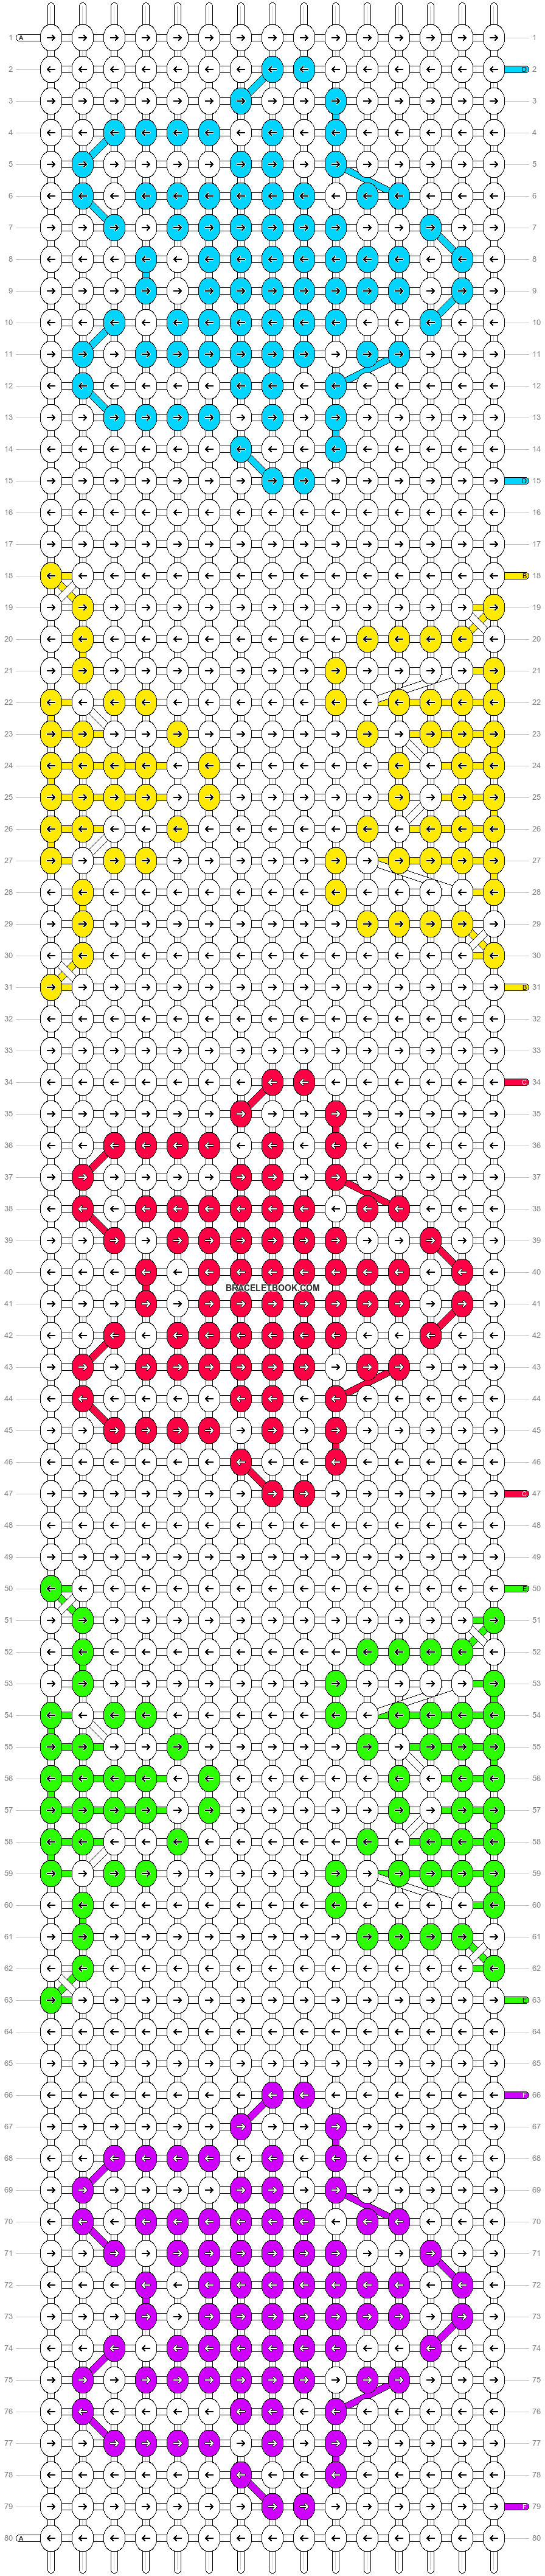 Alpha pattern #39626 variation #48005 pattern